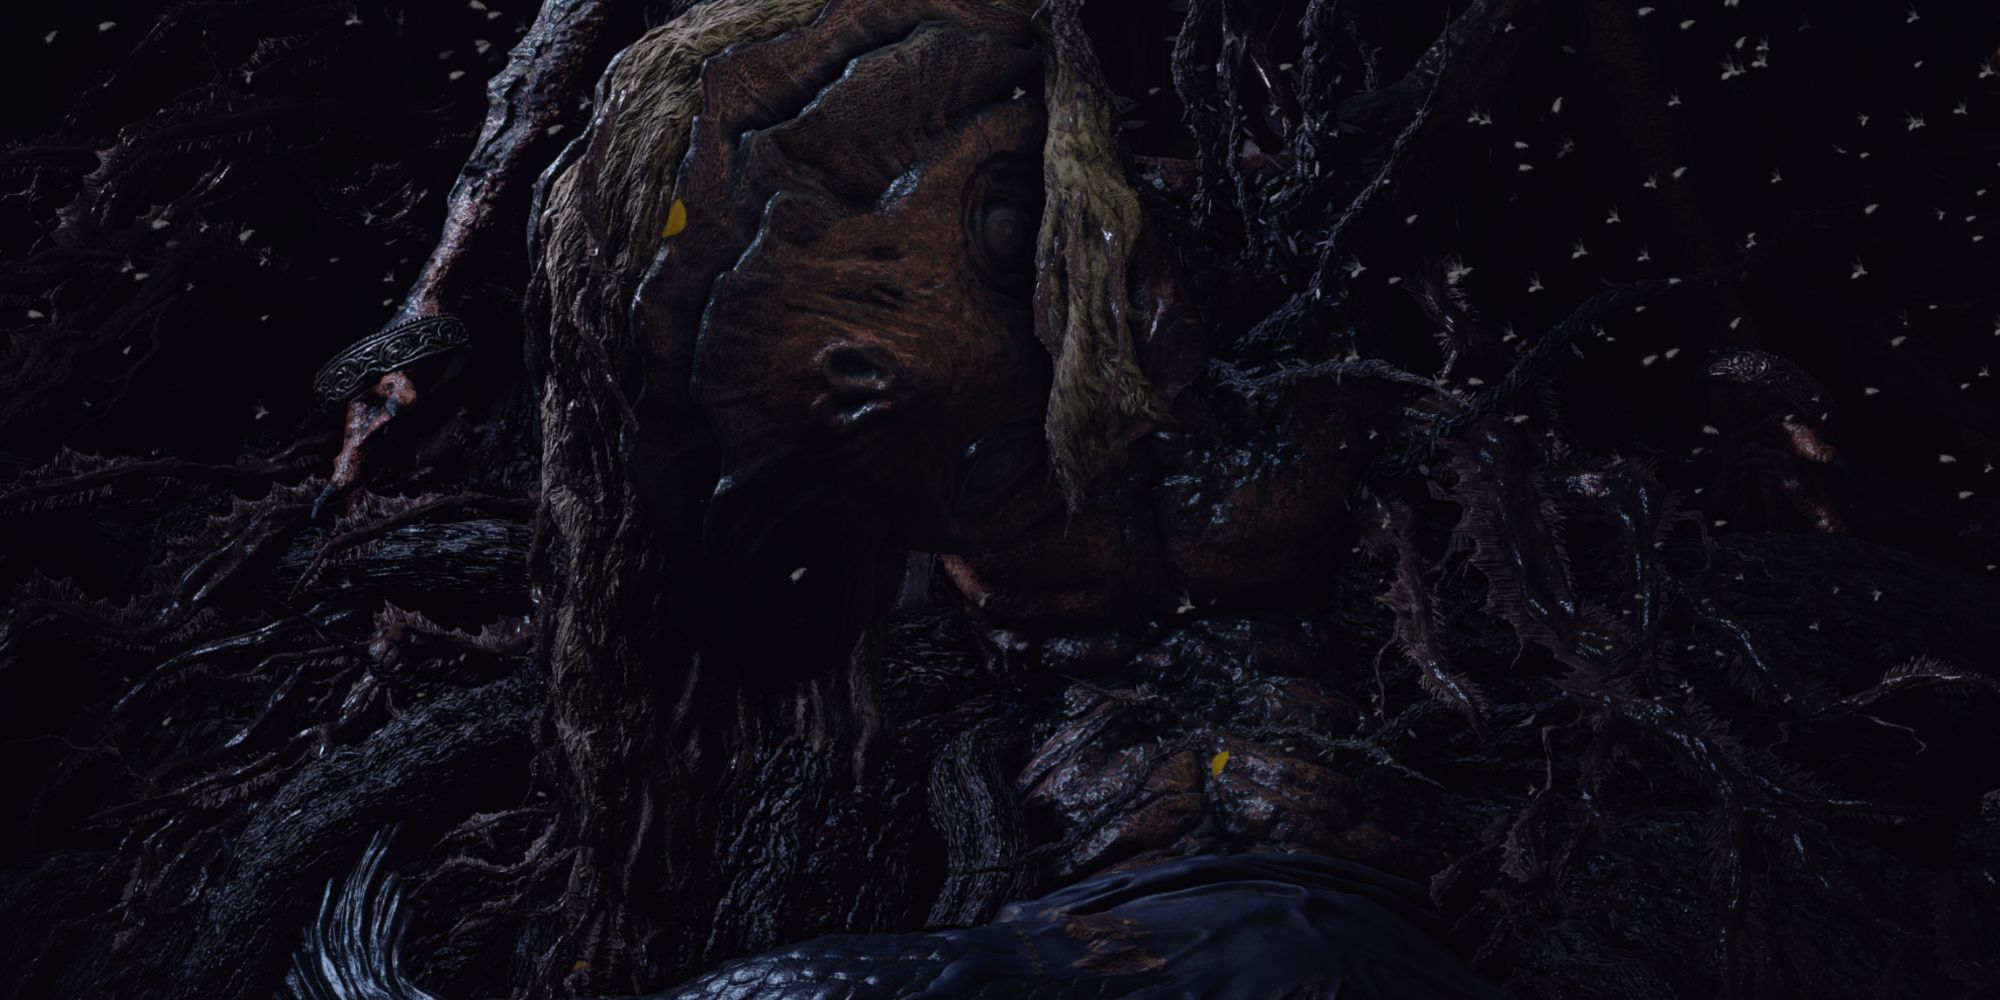 Elden Ring Godwyn's Corpse in the Deeproot Depths